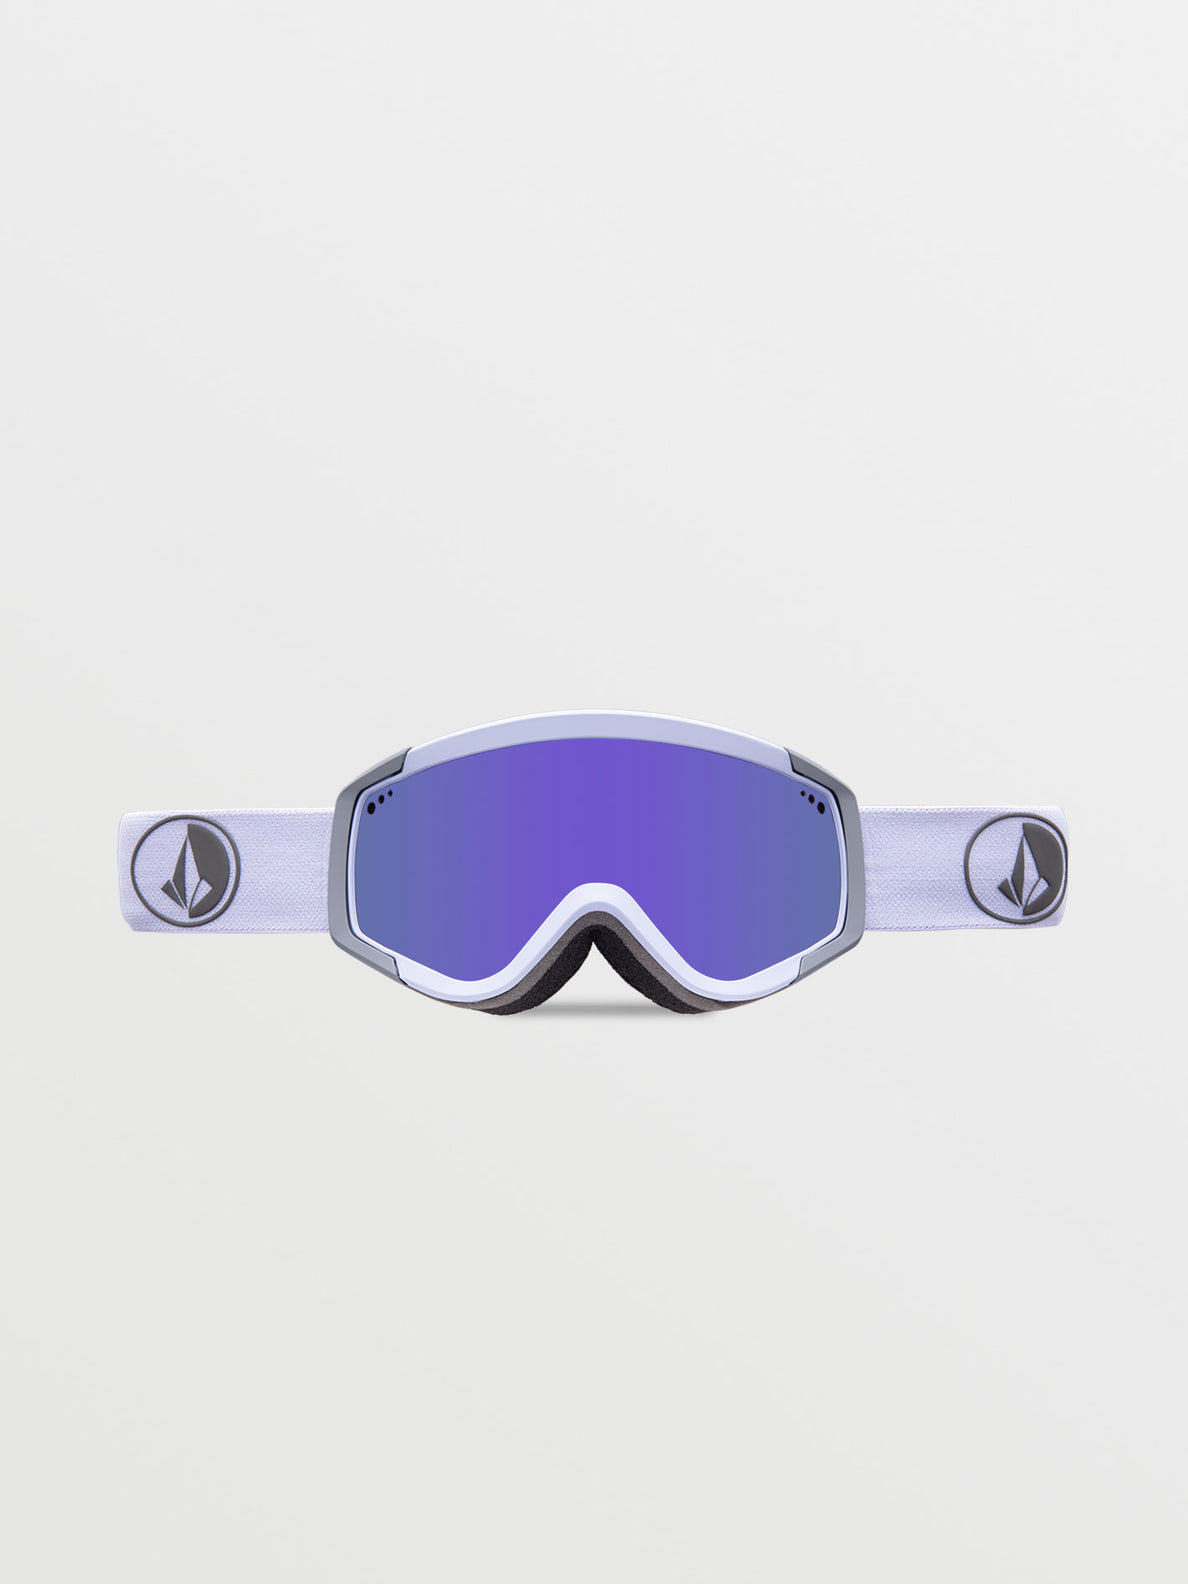 Attunga Youth Goggle - Lilac/Storm / Purple Chrome+BL